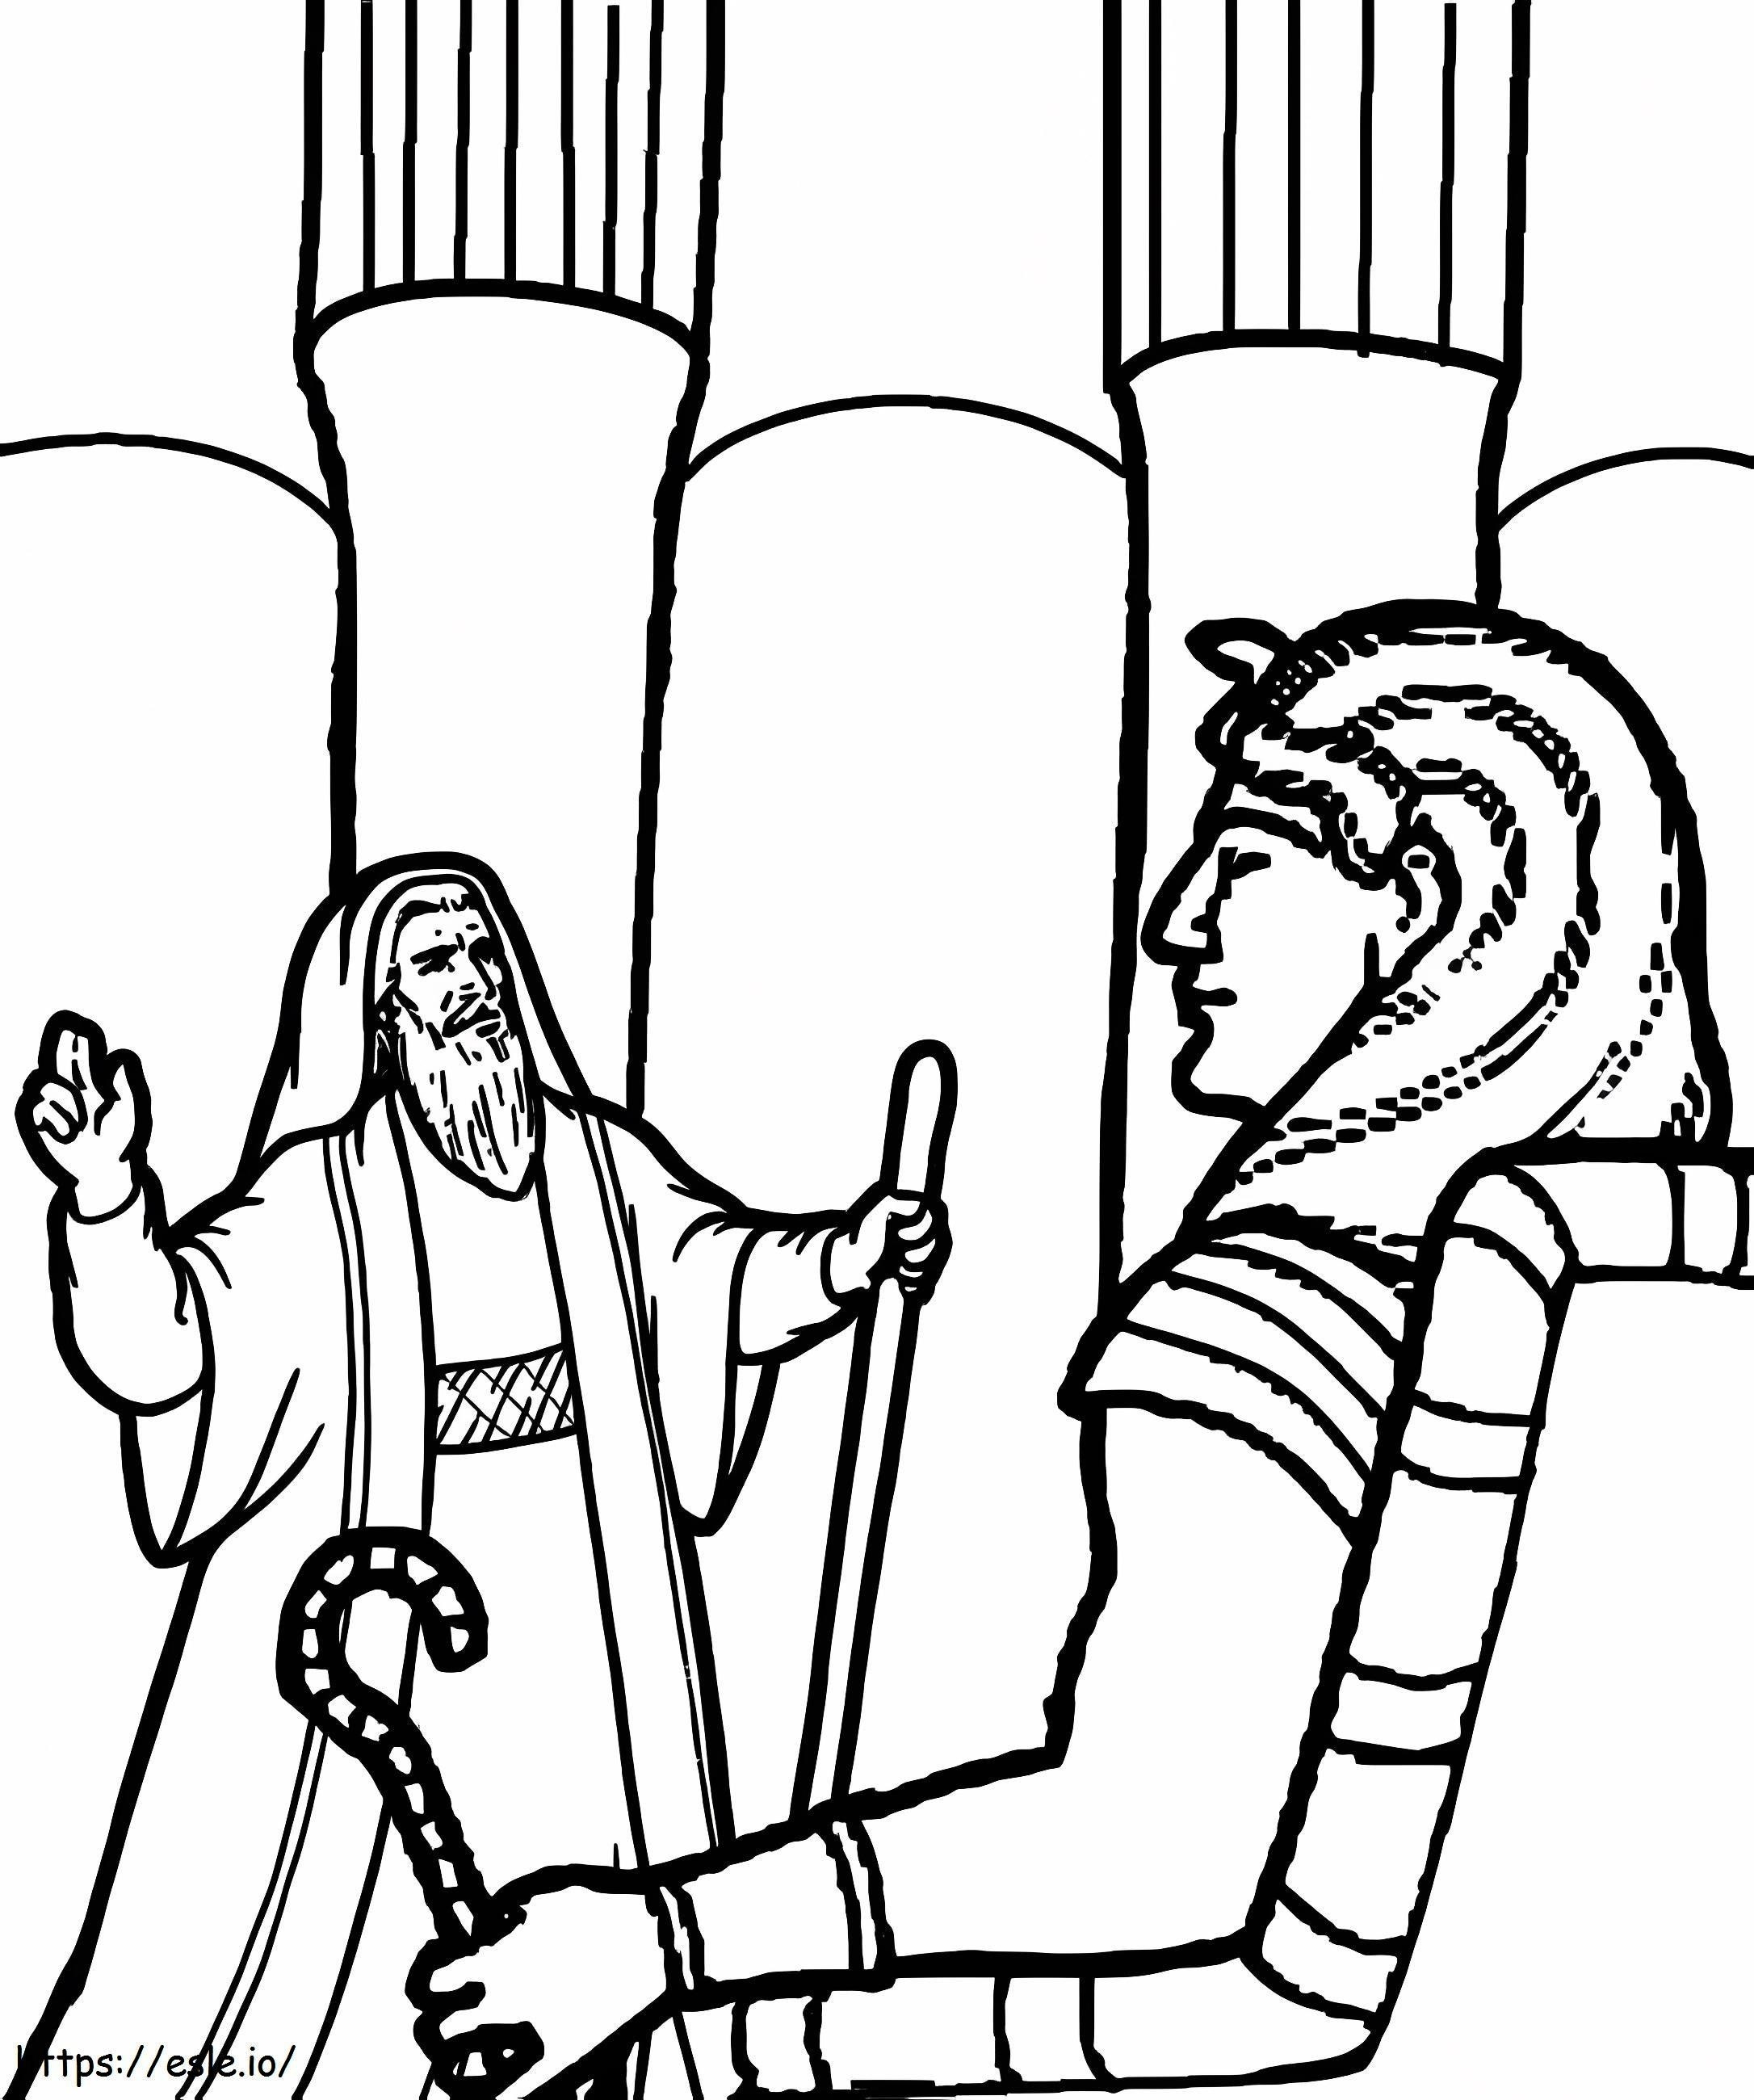 Pharaoh And Moses coloring page